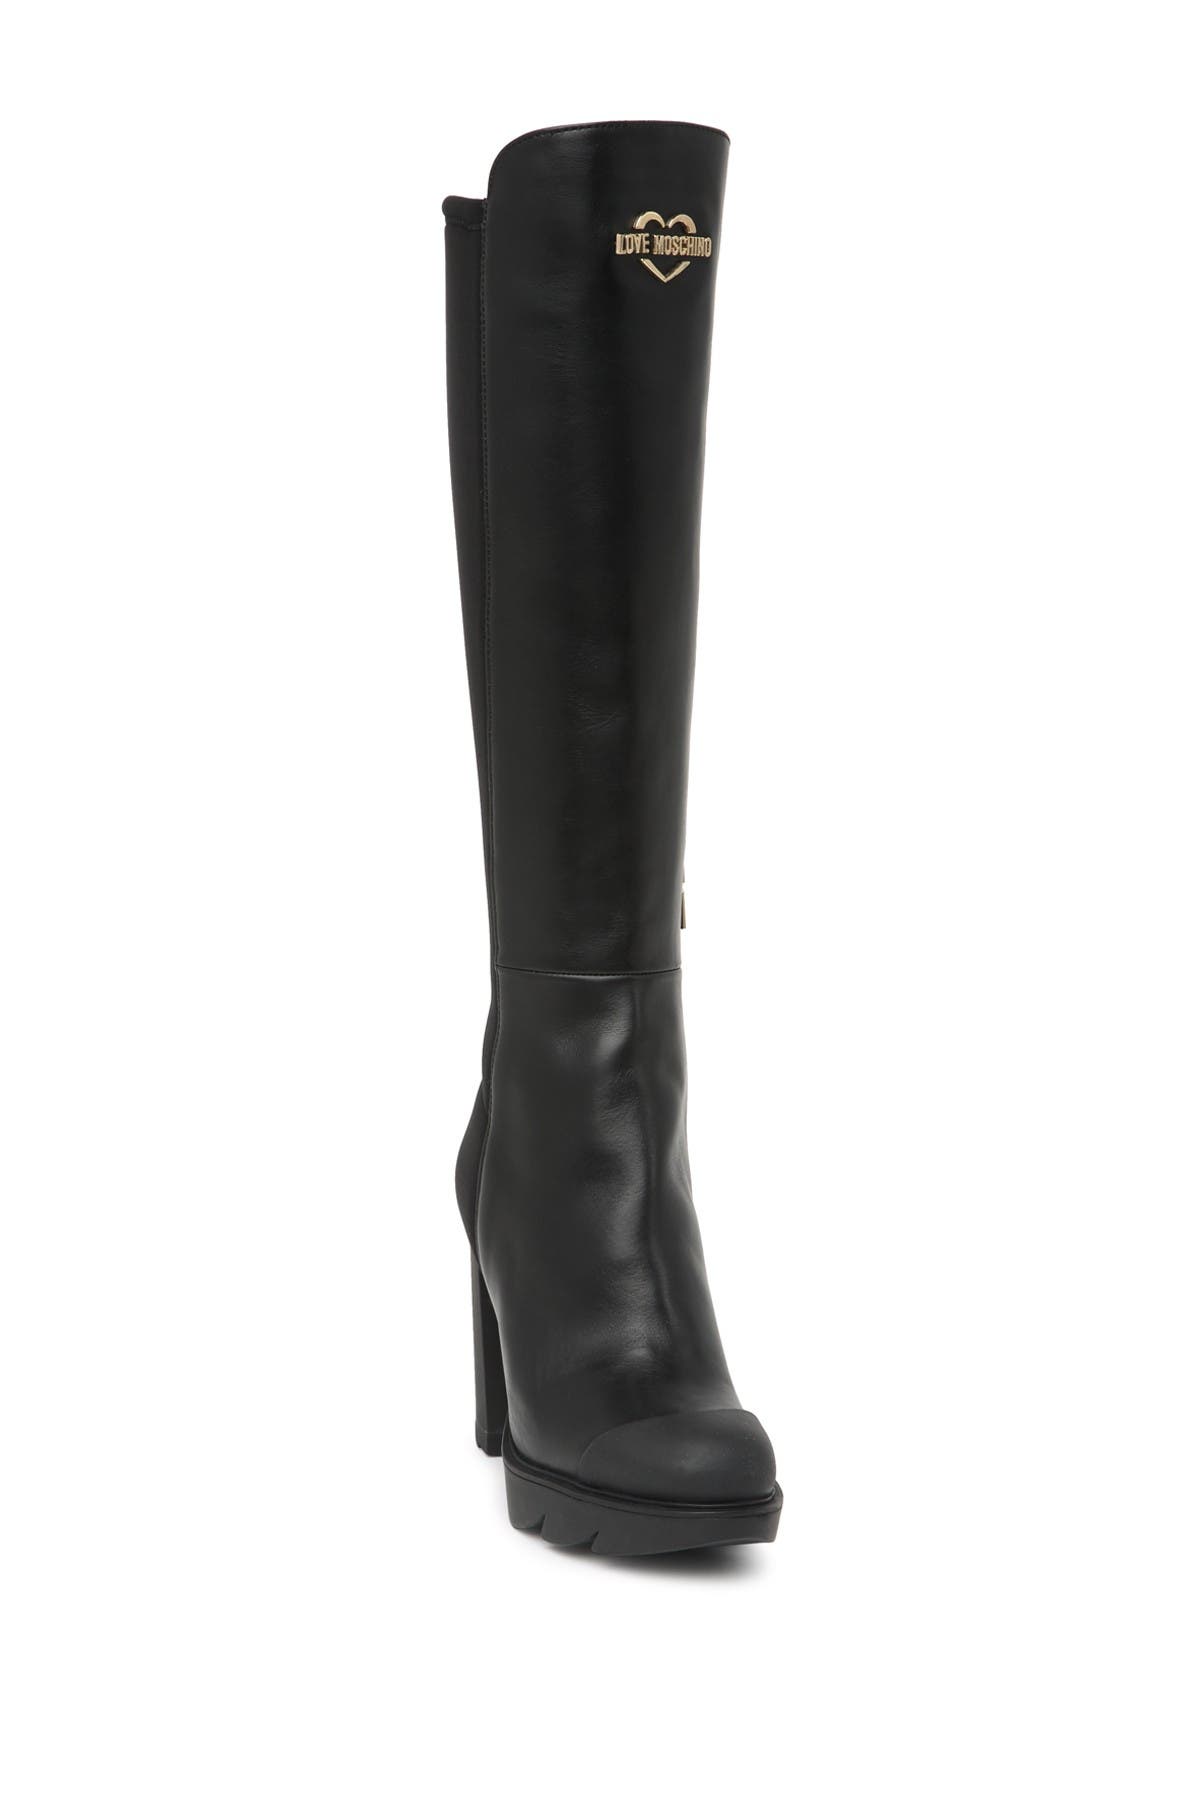 LOVE Moschino | Tall Leather Block Heel 